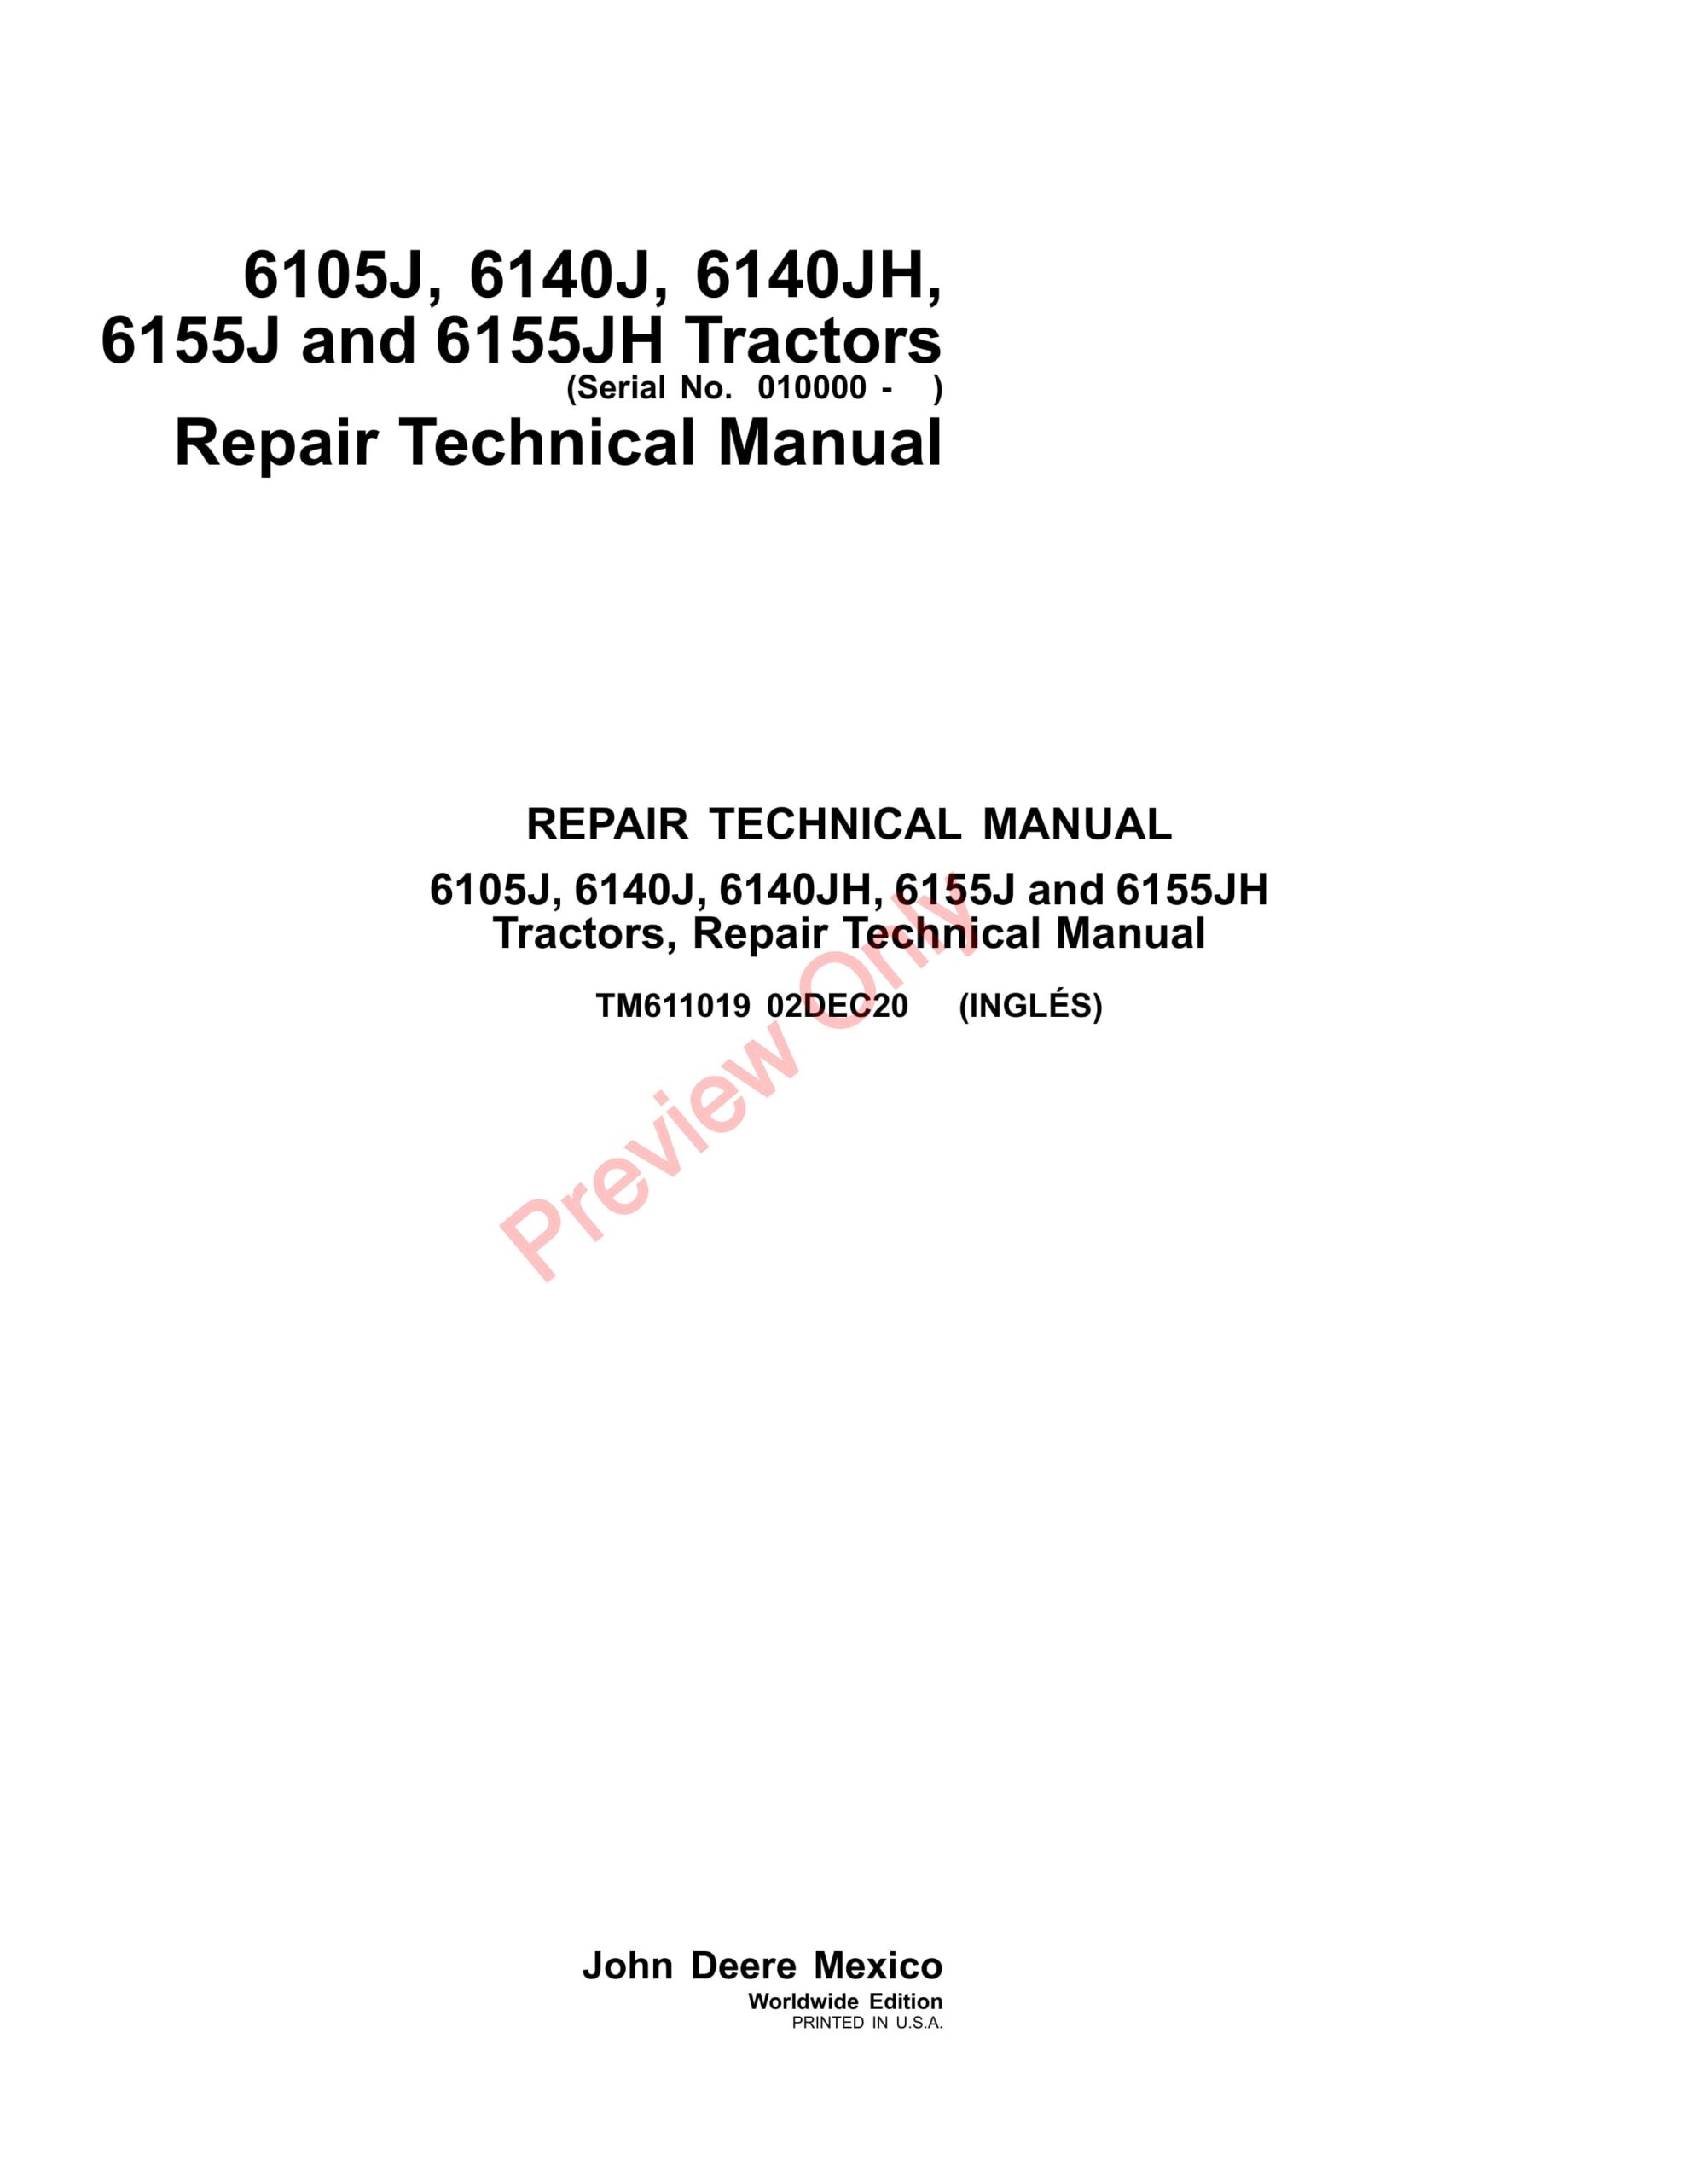 John Deere 6105J, 6140J, 6140JH, 6155J and 6155JH Tractors (010000-) Technical Manual TM611019 02DEC20-1